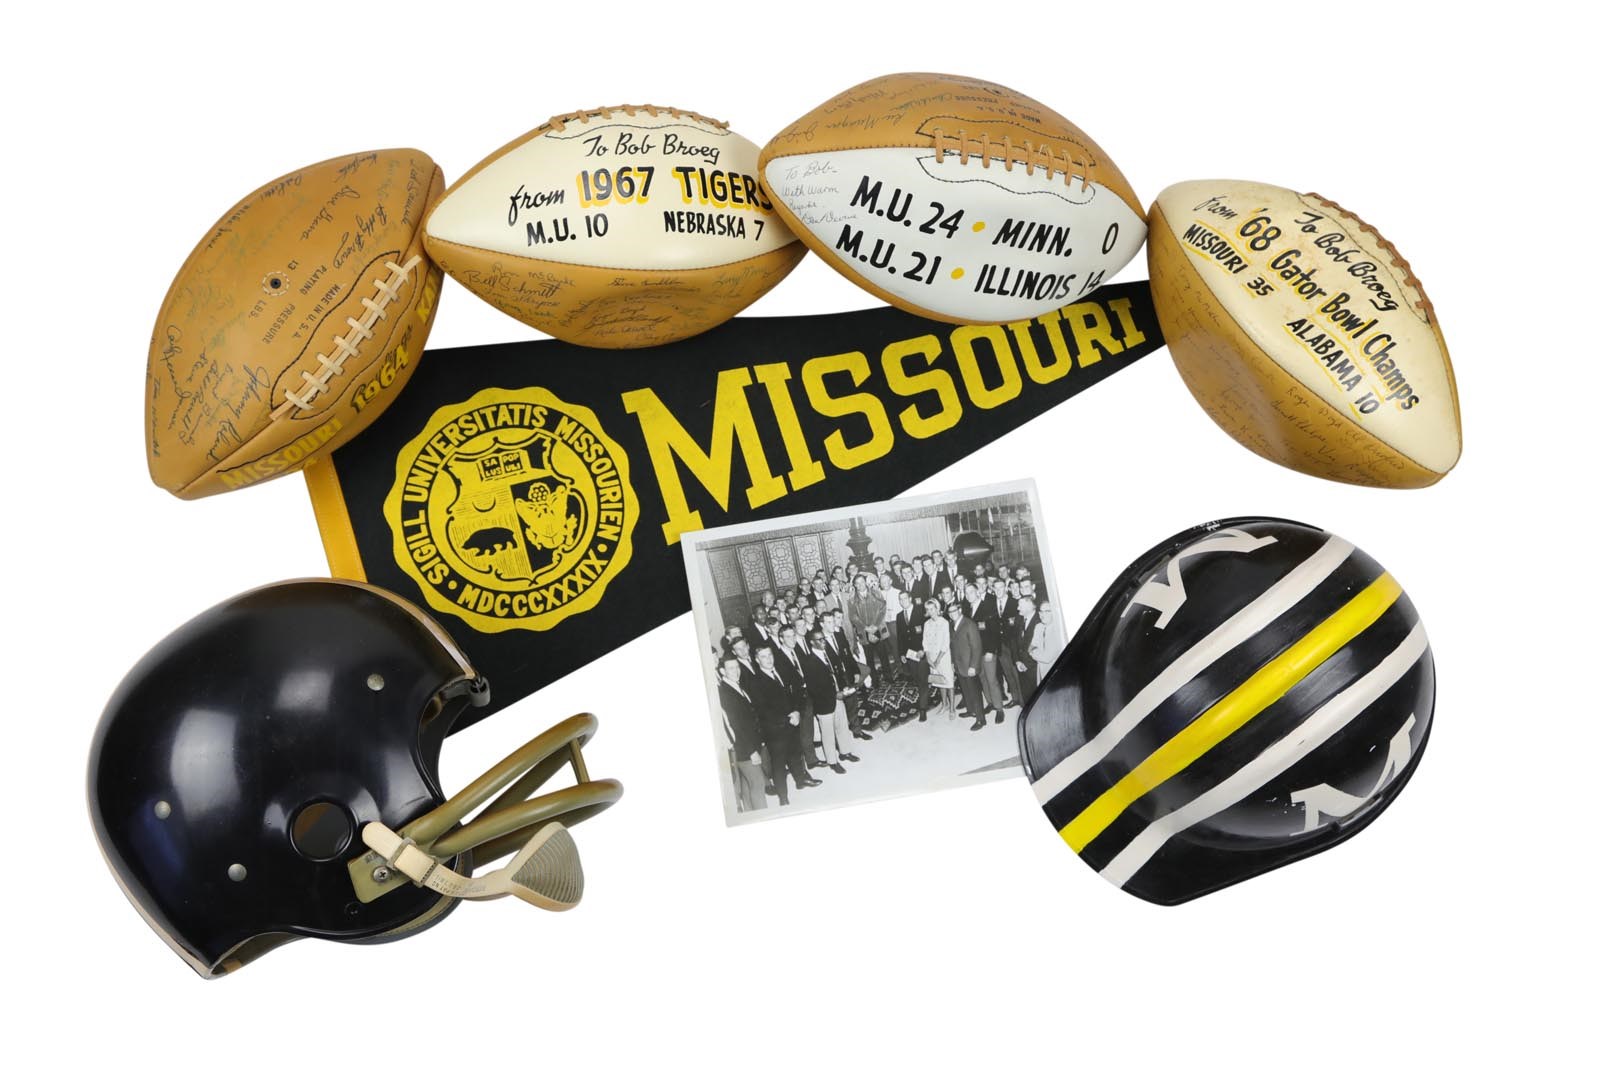 1960's U of Missouri Football Collection (8) From Sports Writer Bob Broeg